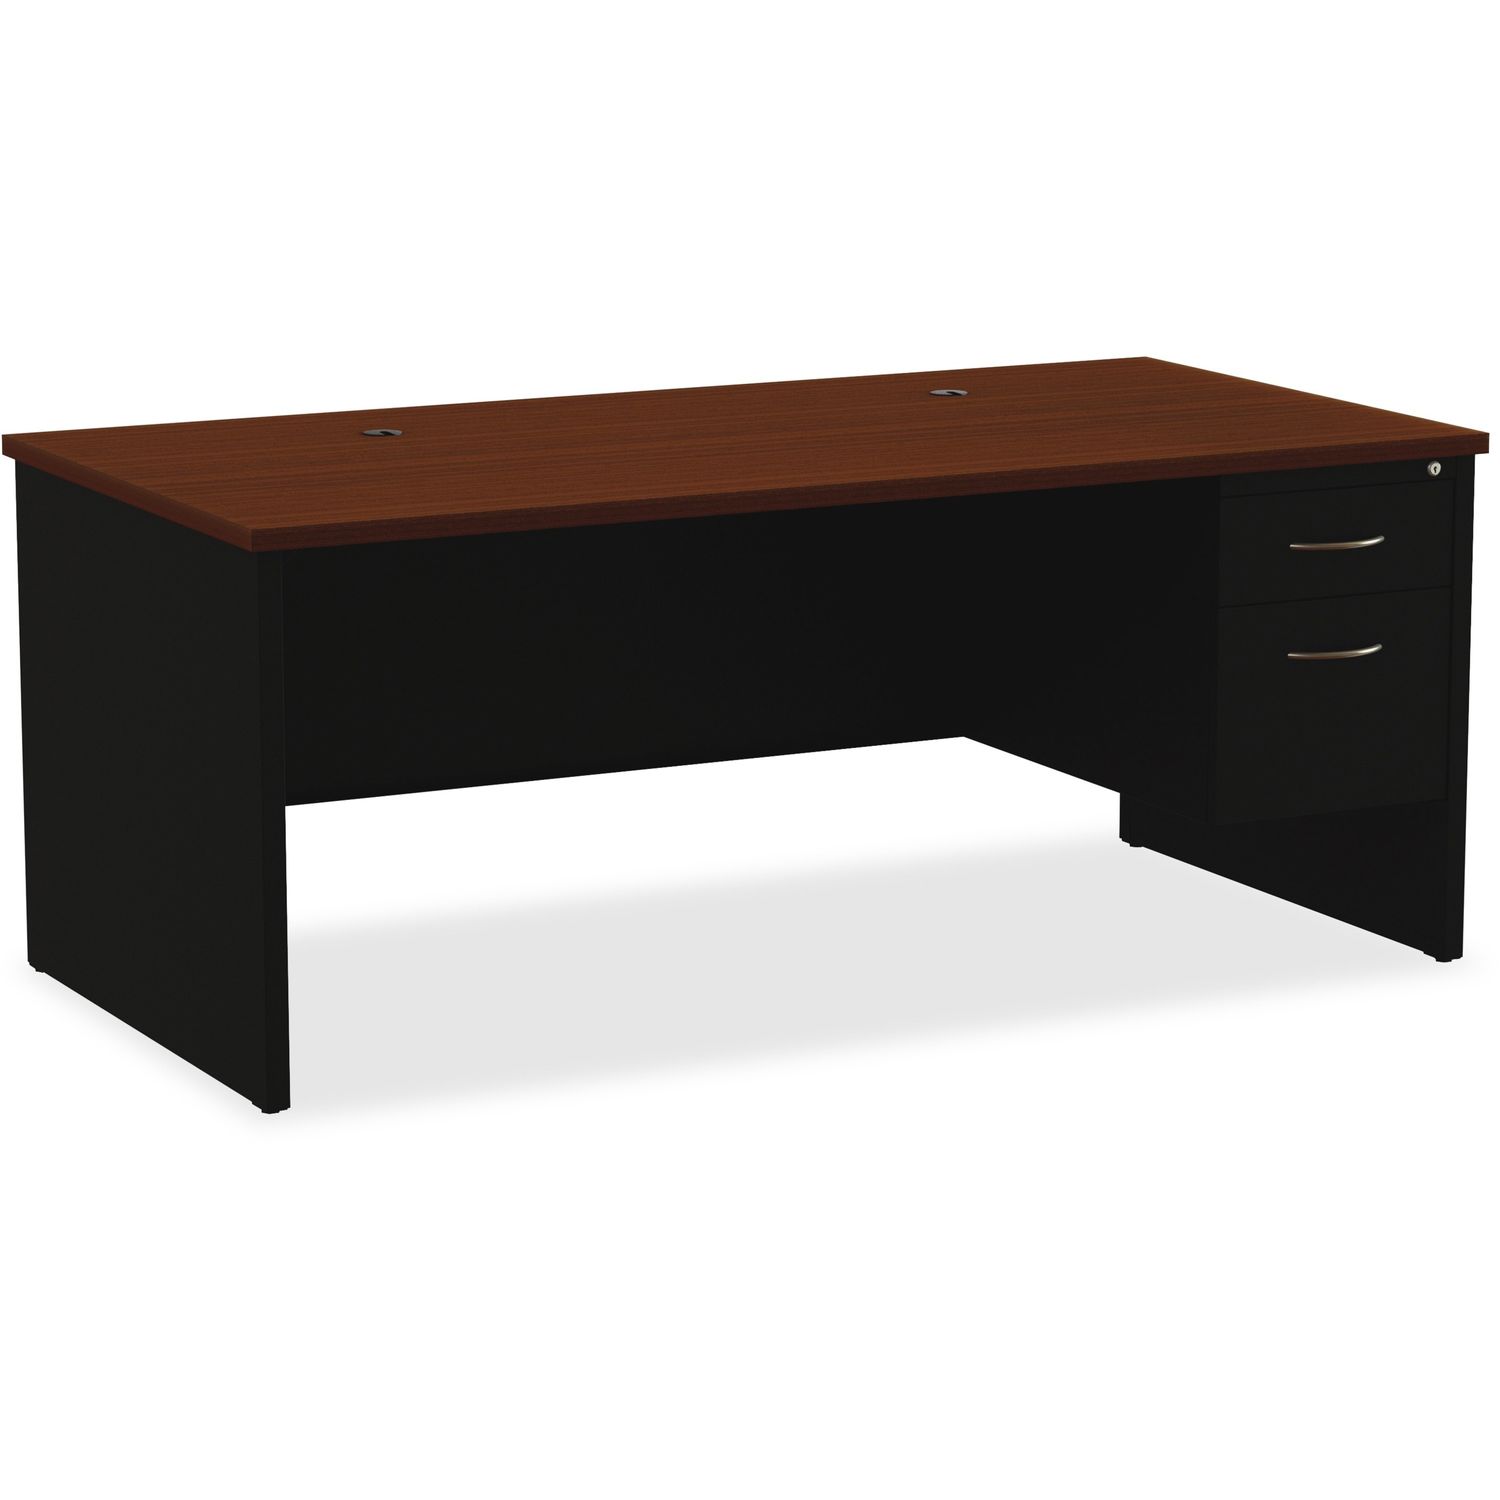 Walnut Laminate Commercial Steel Desk Series Pedestal Desk - 2-Drawer 72" x 36" , 1.1" Top, 2 x Box Drawer(s), File Drawer(s), Single Pedestal on Right Side, Material: Steel